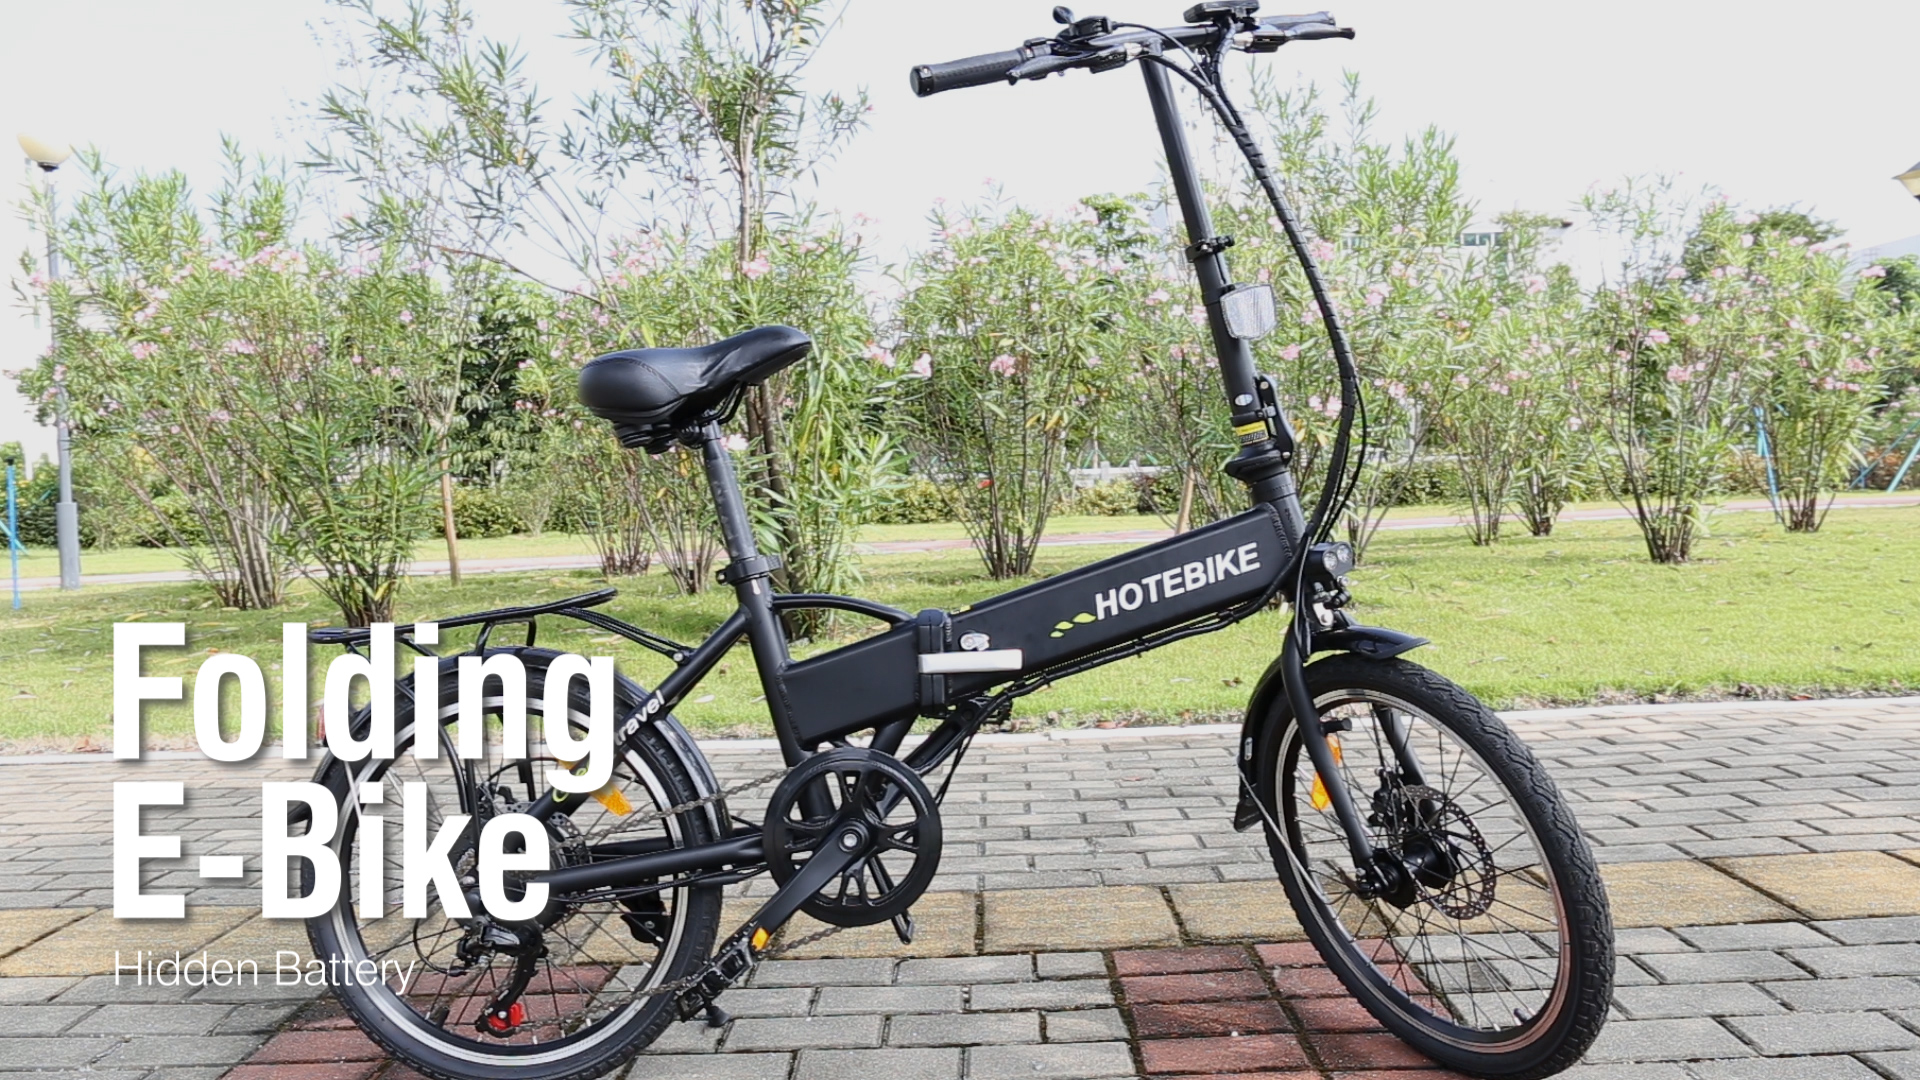 Folding Electric Bike 20 inch City Bicycle Video HOTEBIKE